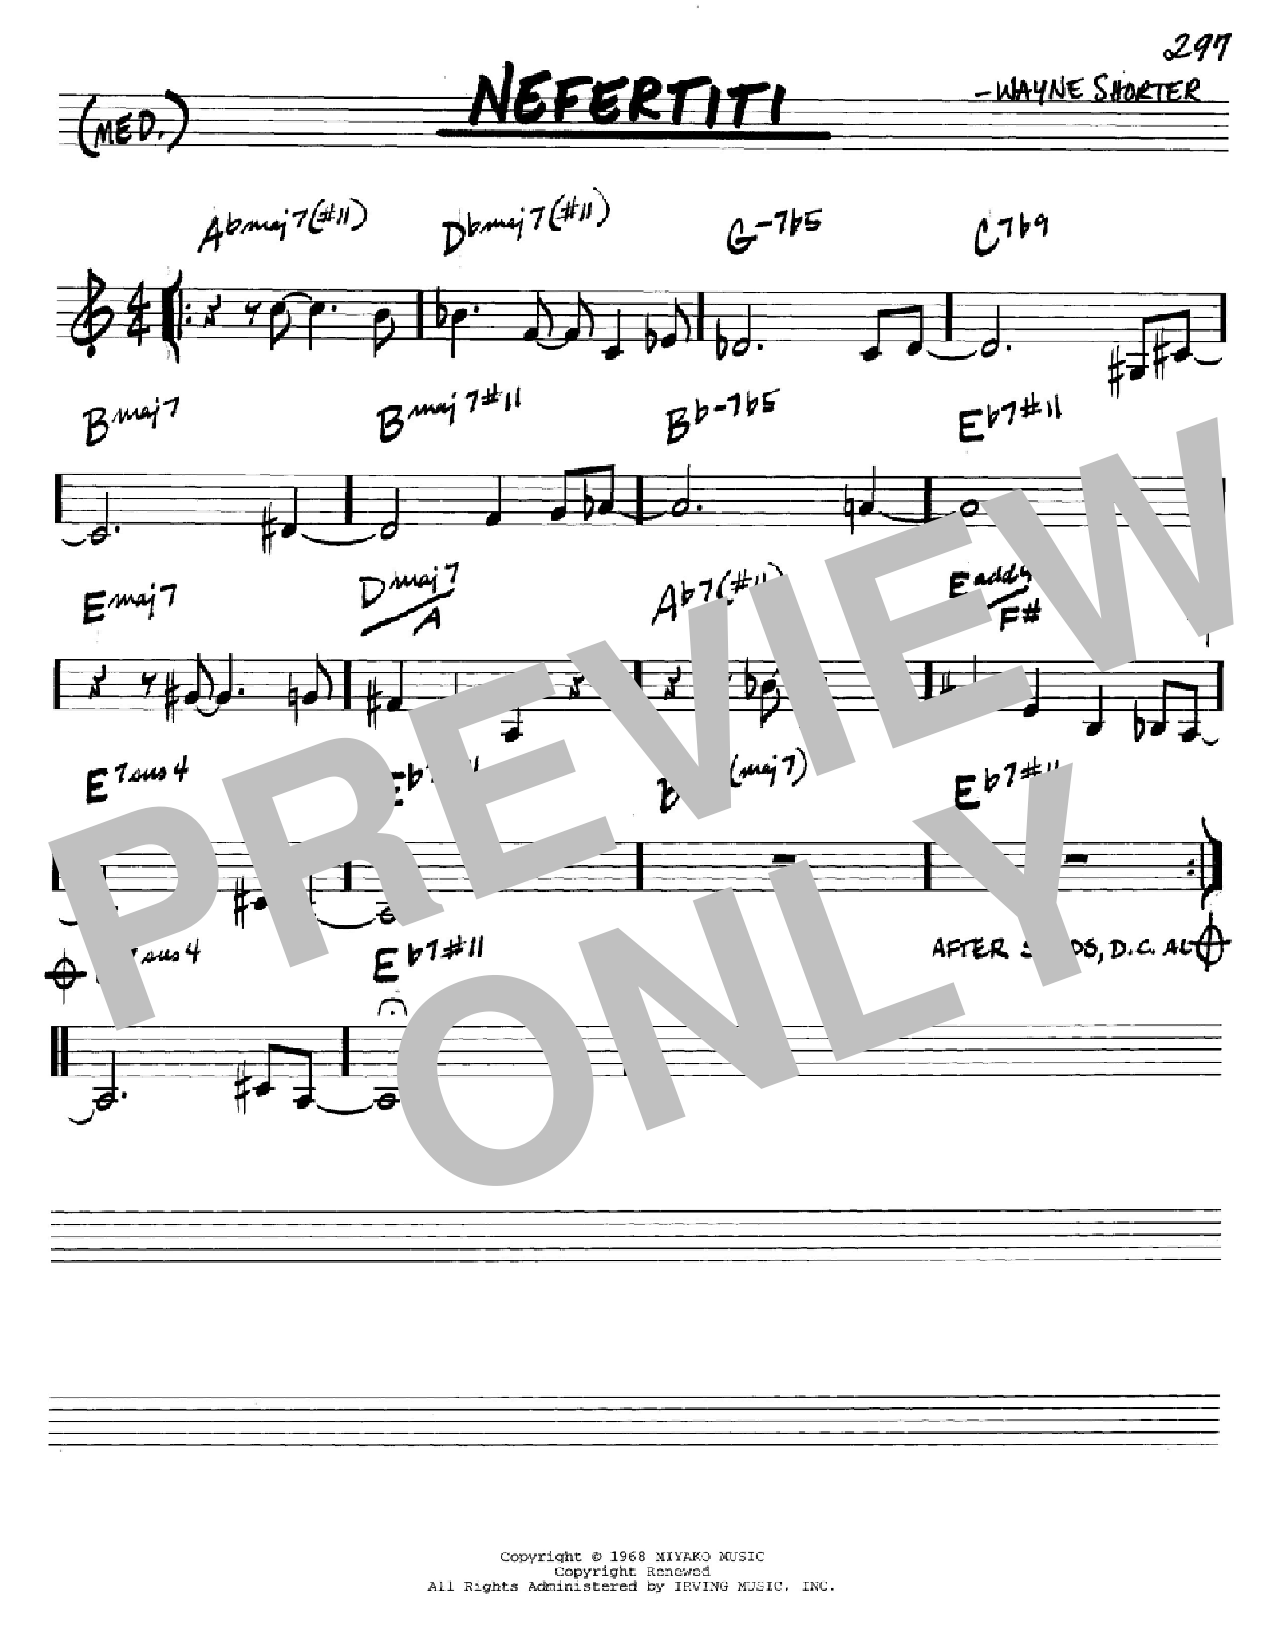 Wayne Shorter Nefertiti Sheet Music Notes & Chords for Real Book – Melody & Chords - Download or Print PDF